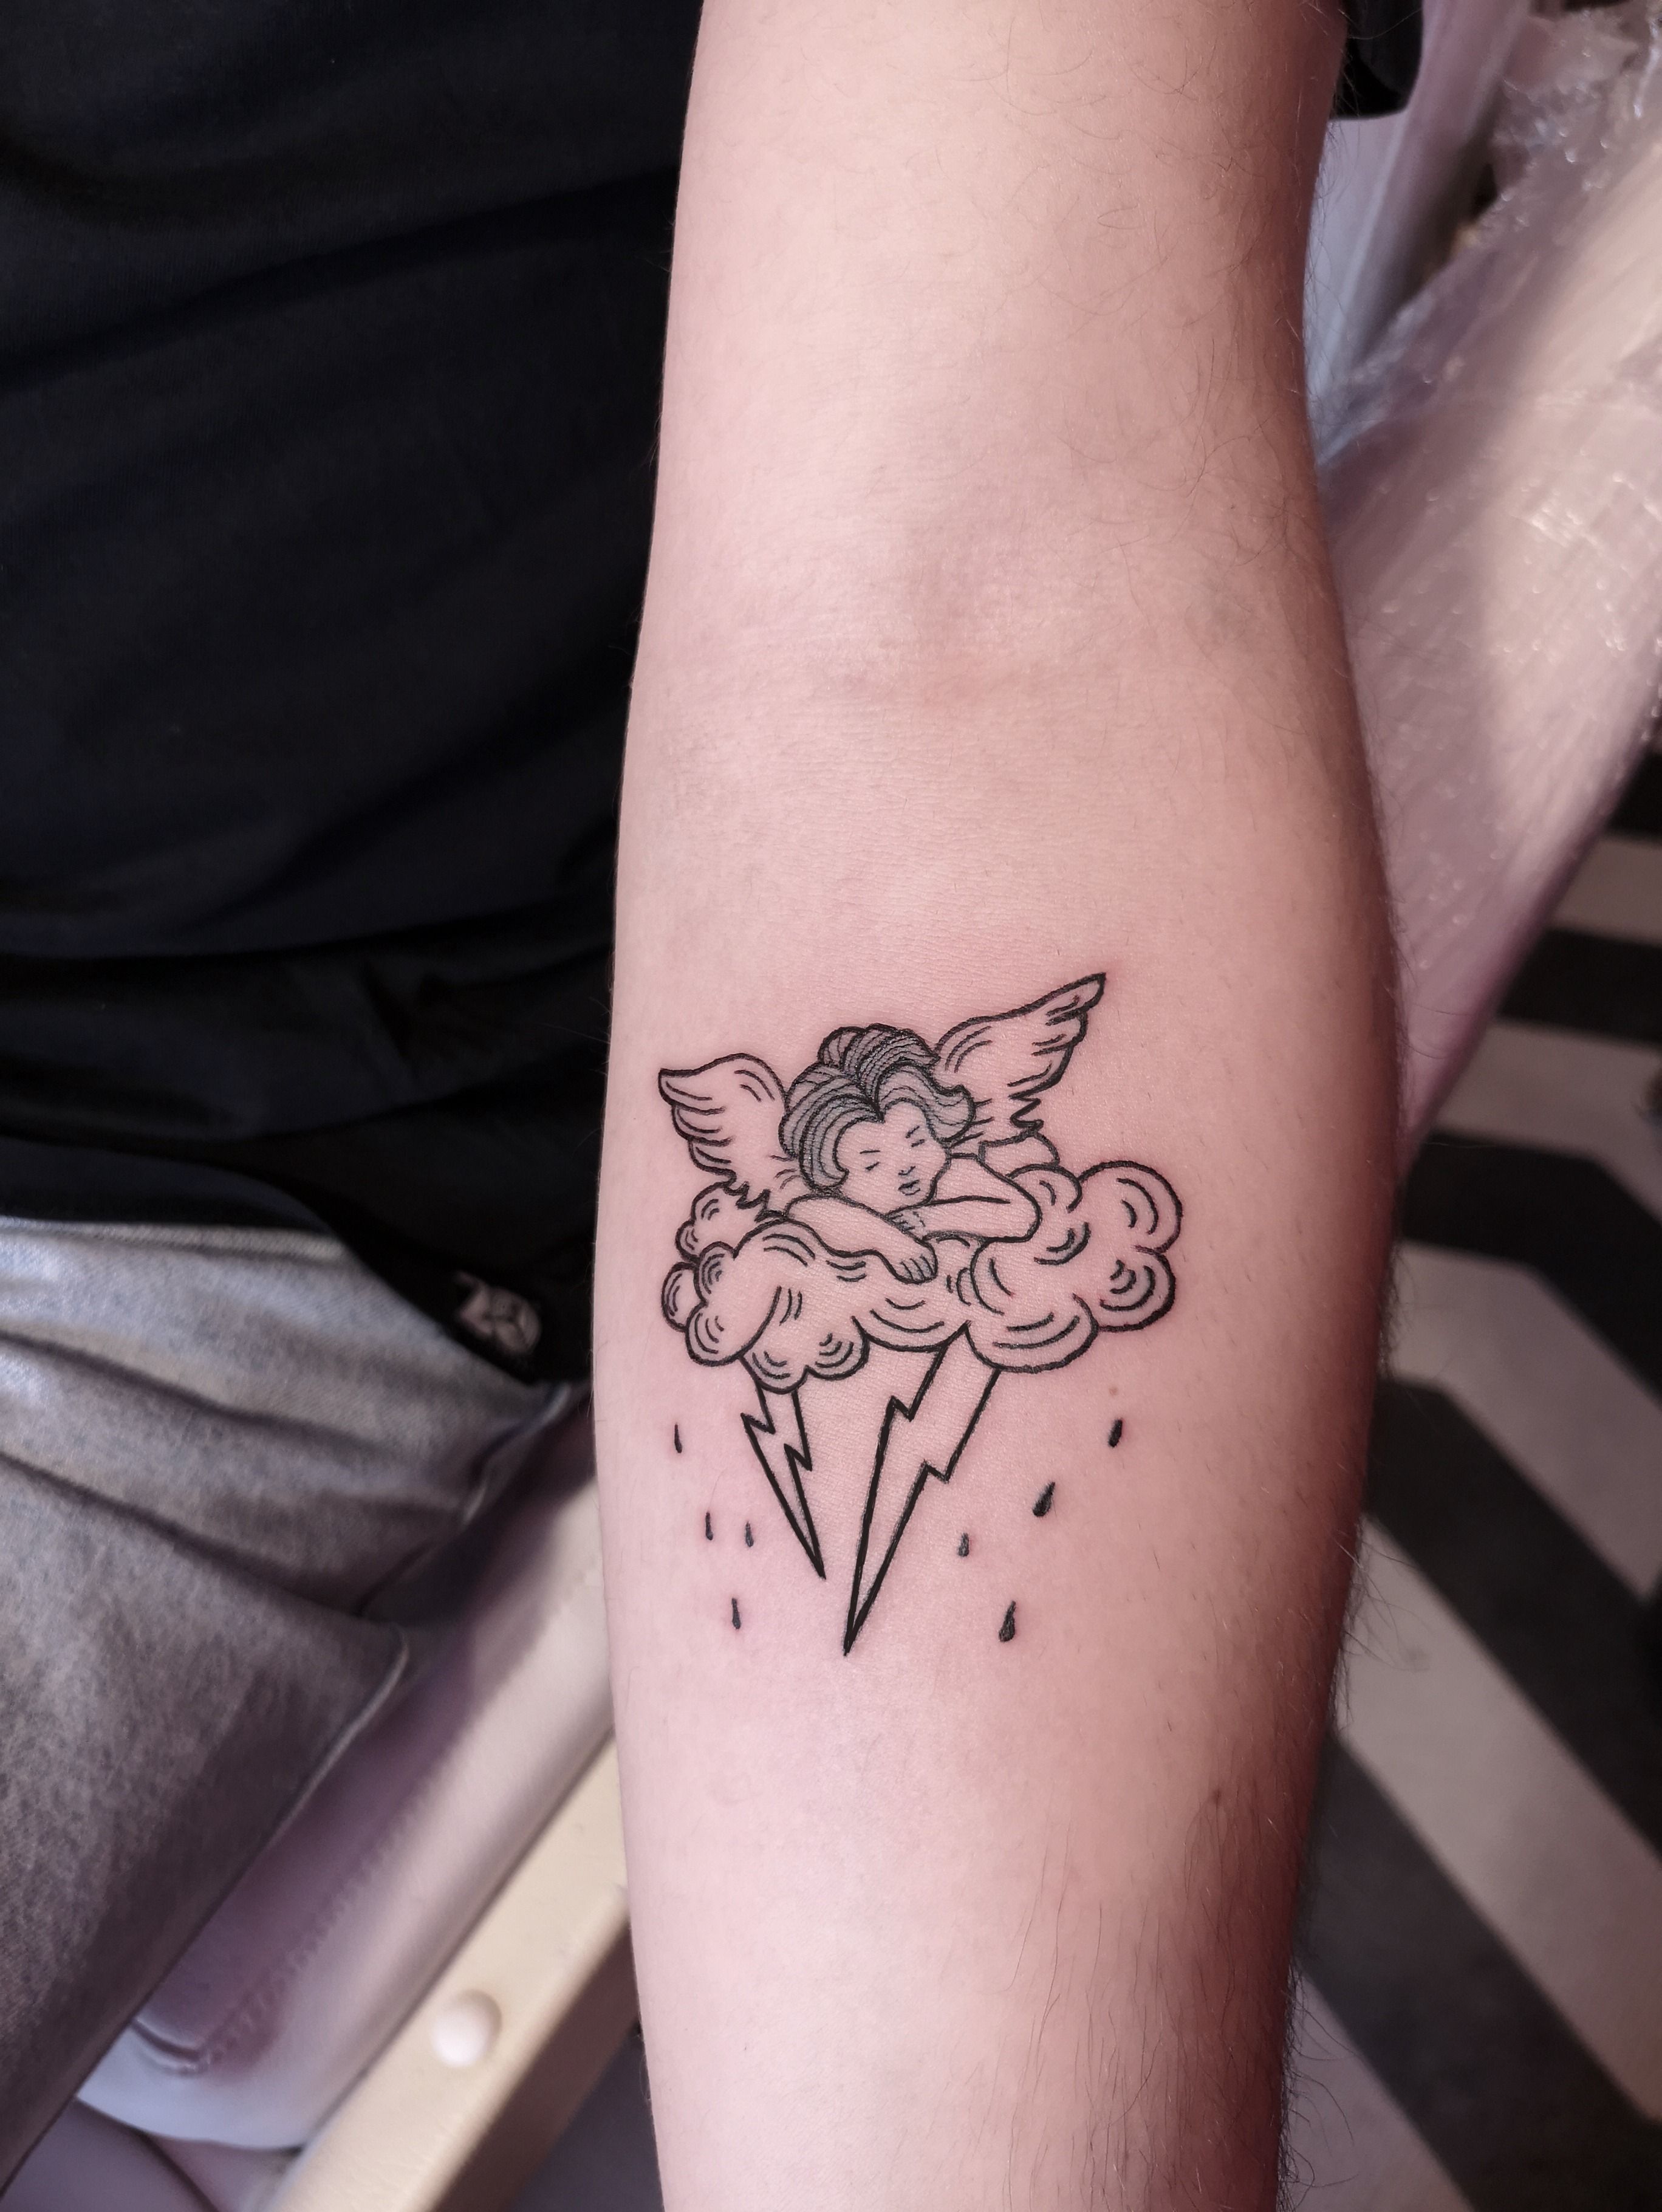 Kingsman tattoo  art studio on Twitter Angel wings tattoo  httpstcoiwZl9U1IvD  Twitter